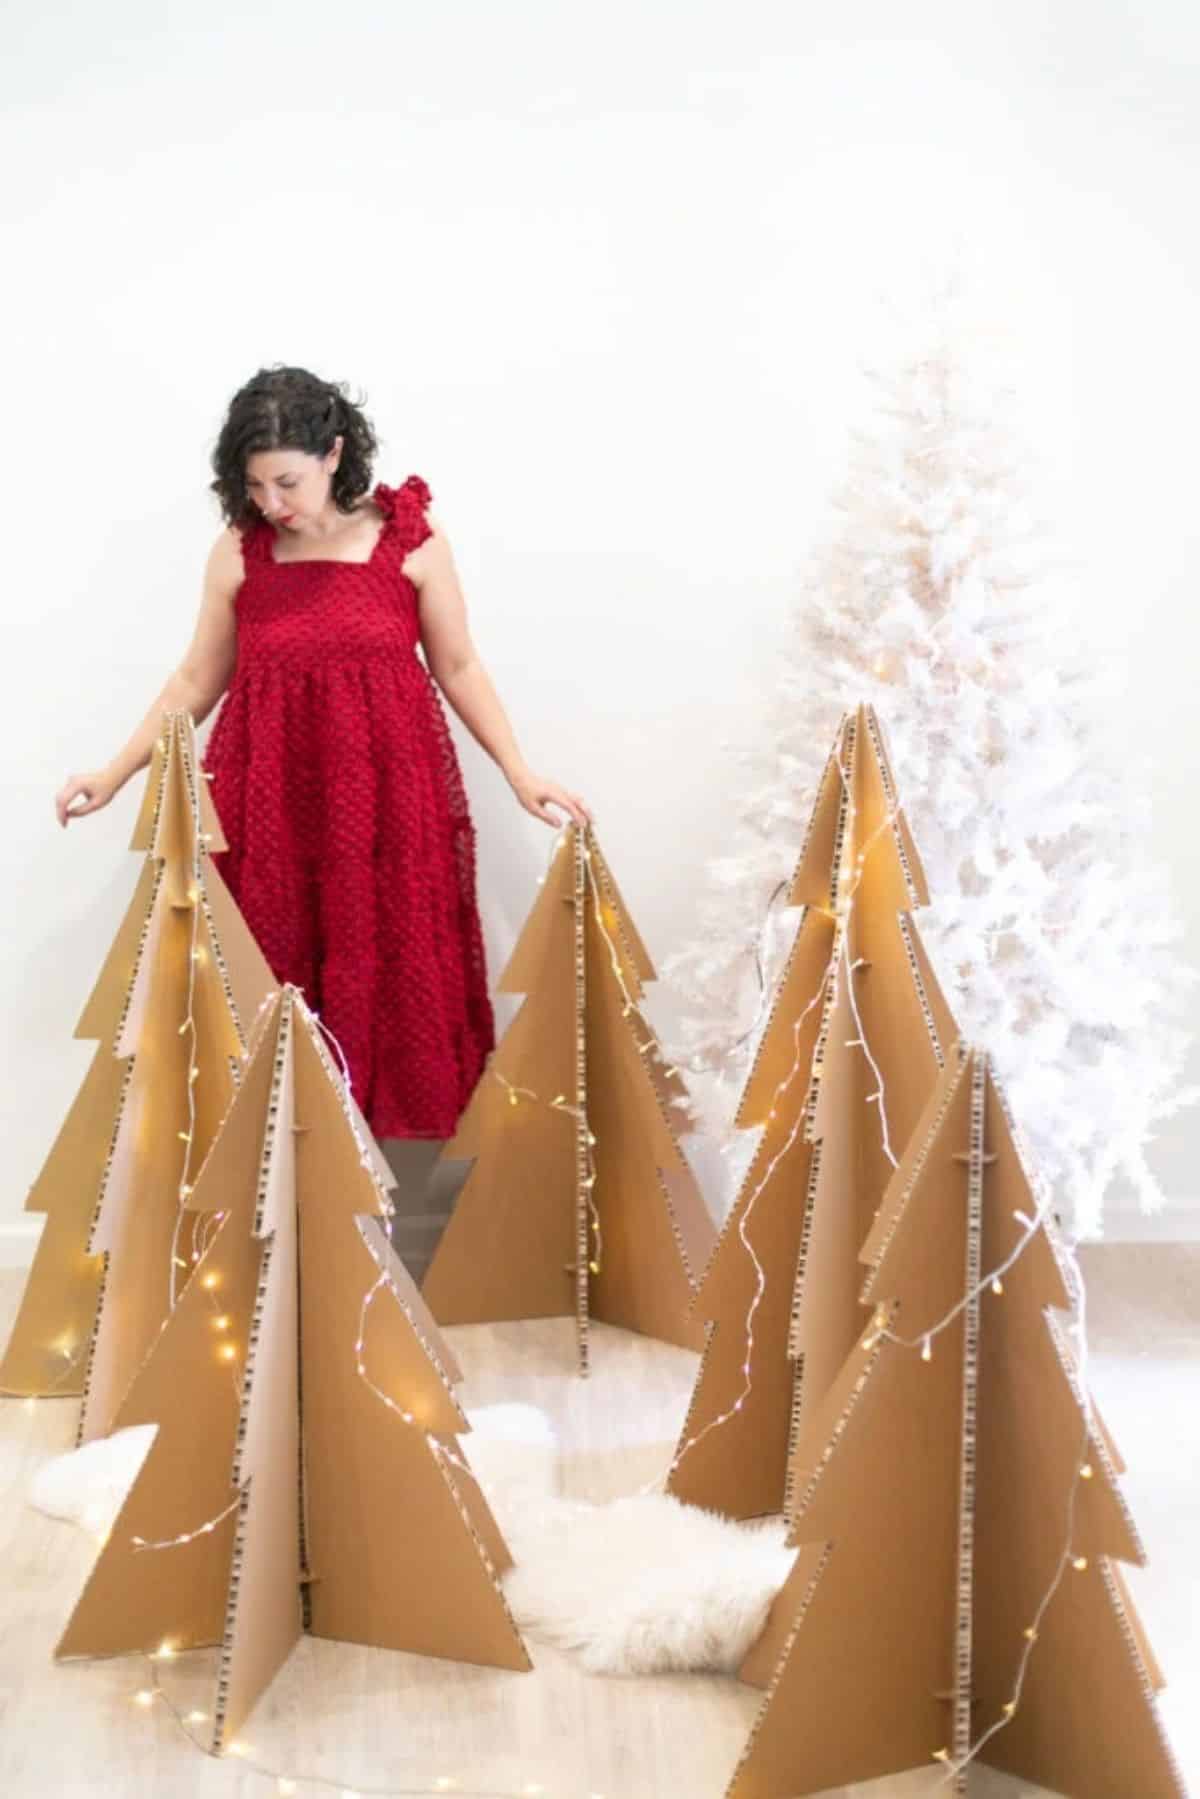 Giant Cardboard Christmas Trees